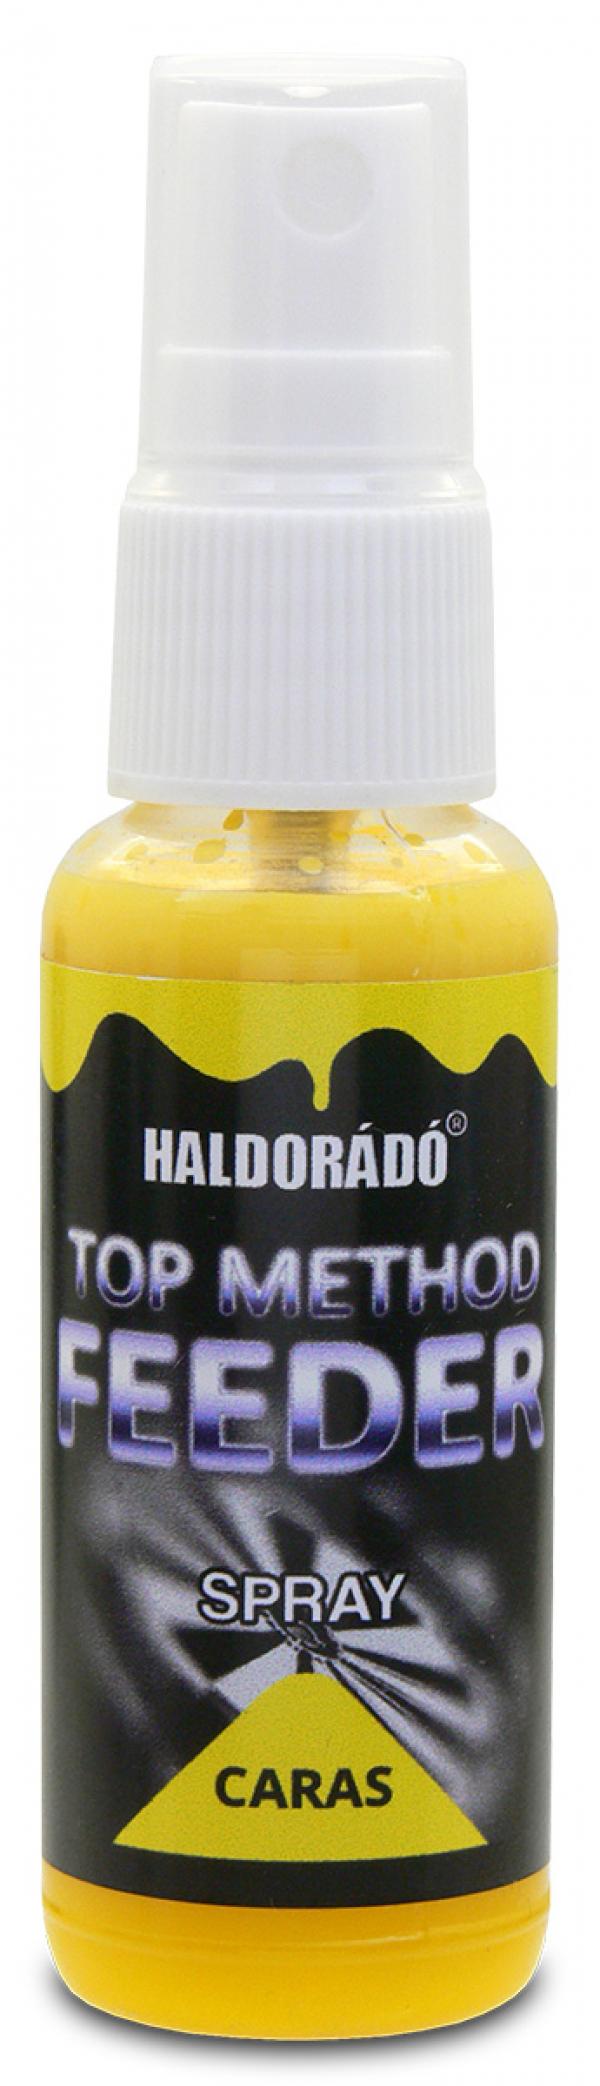 HALDORÁDÓ Top Method Feeder Activator Spray - CARAS